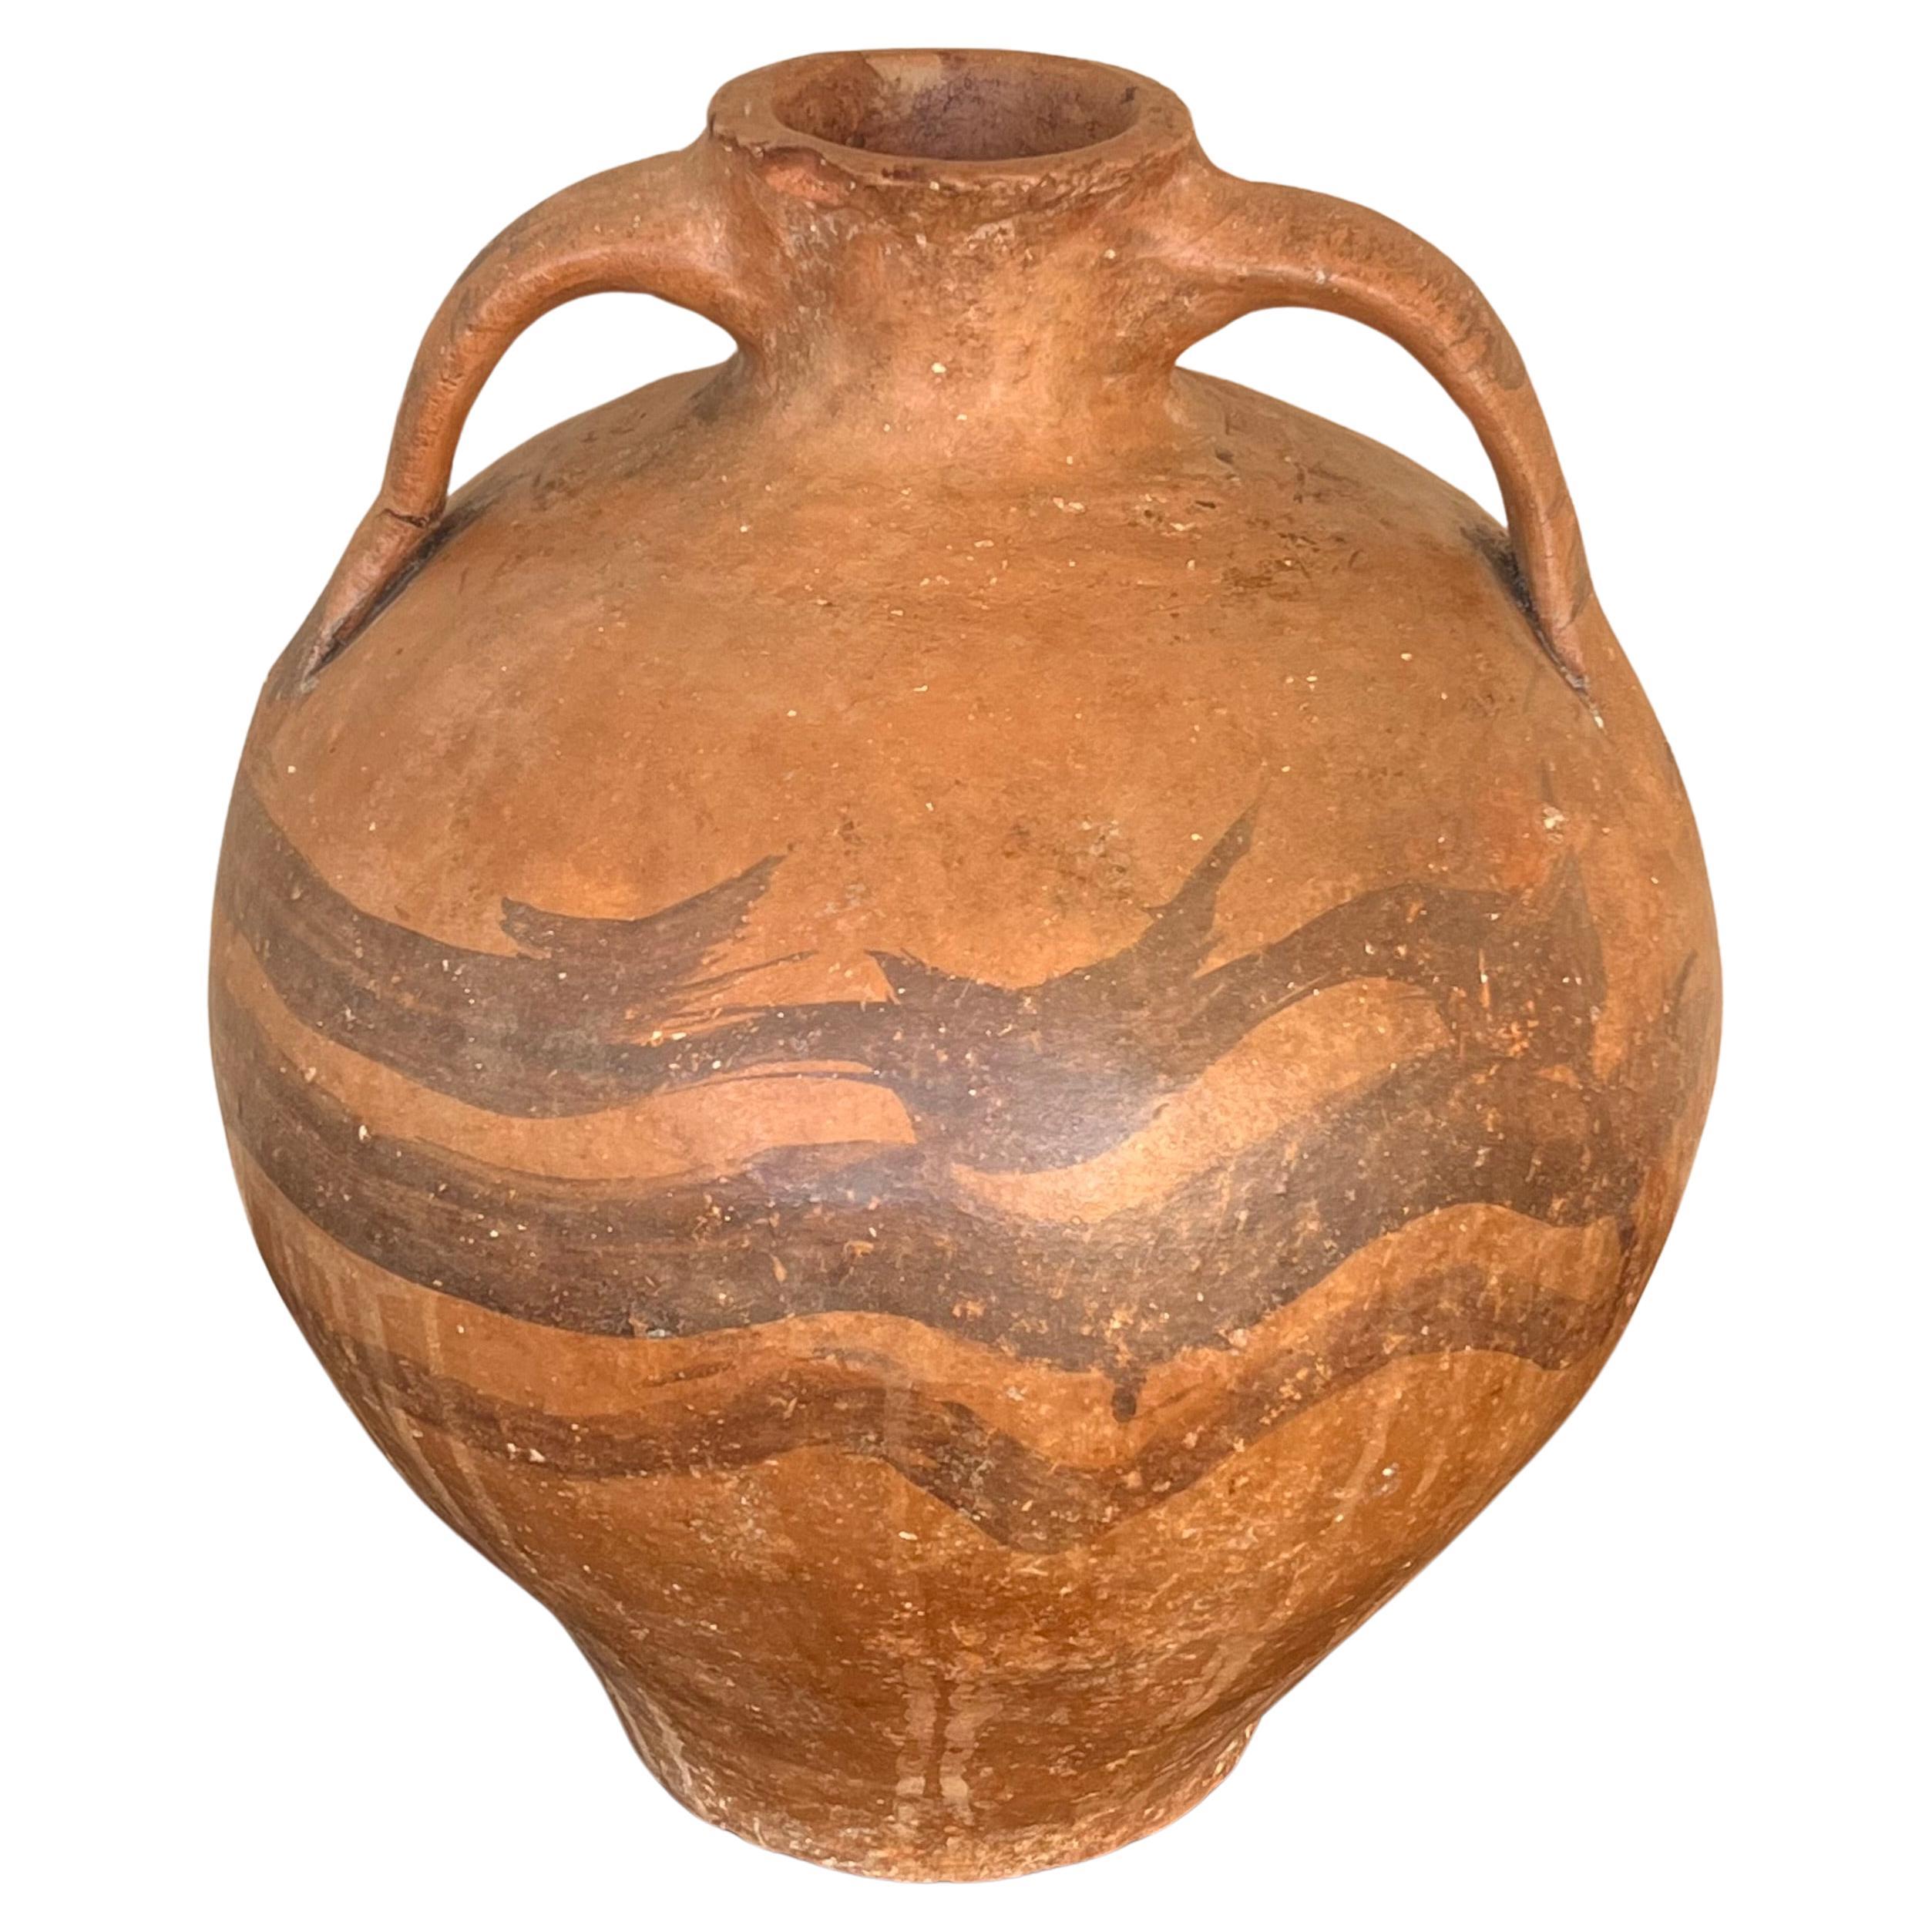 Brautkrug-Vase „Cantaro“ aus Calanda, Spanien, Terrakotta-Vase, 18. Jahrhundert im Angebot